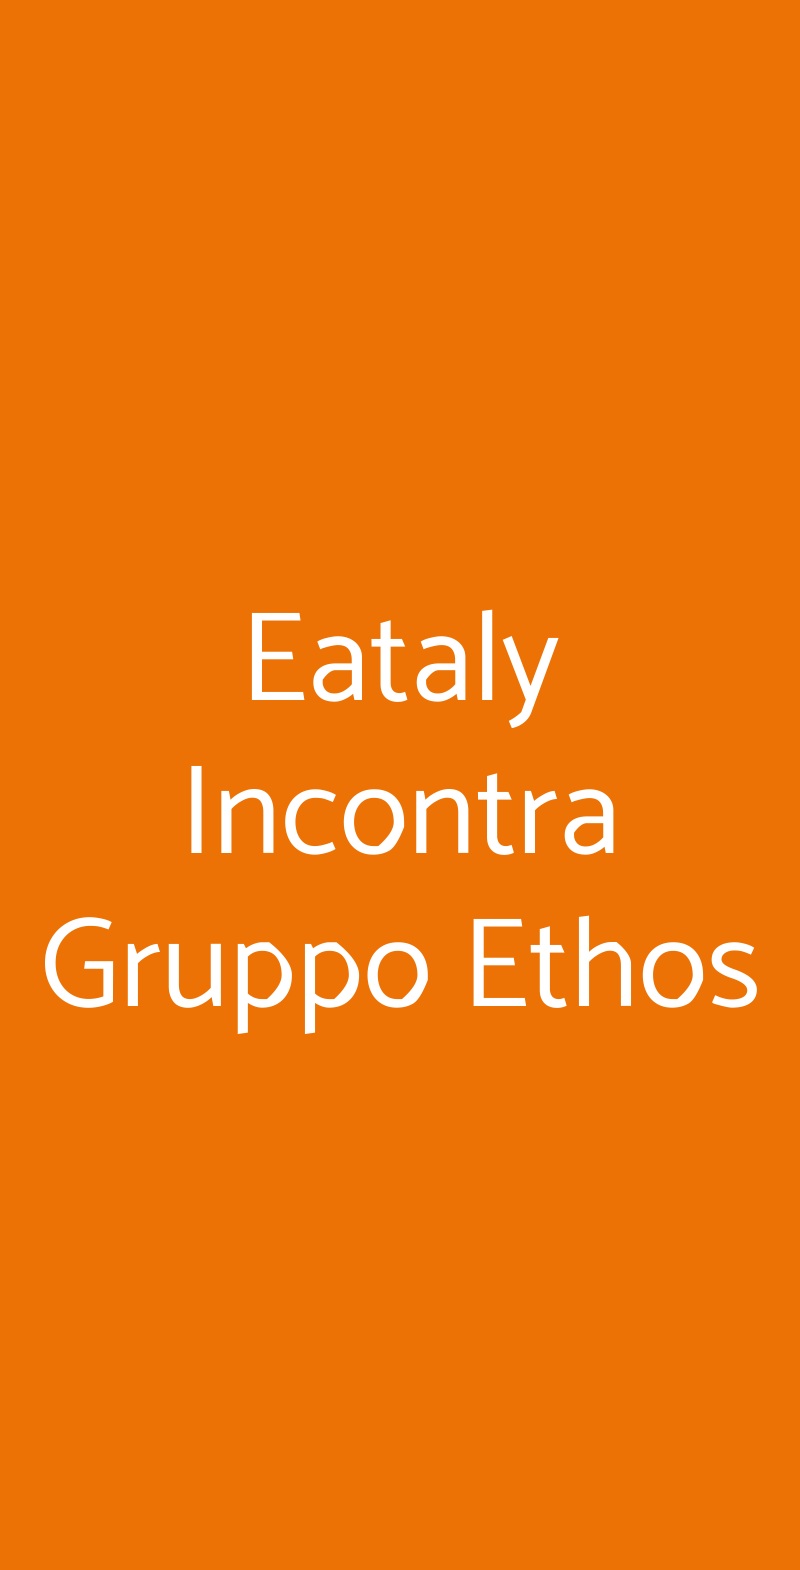 Eataly Incontra Gruppo Ethos Roma menù 1 pagina